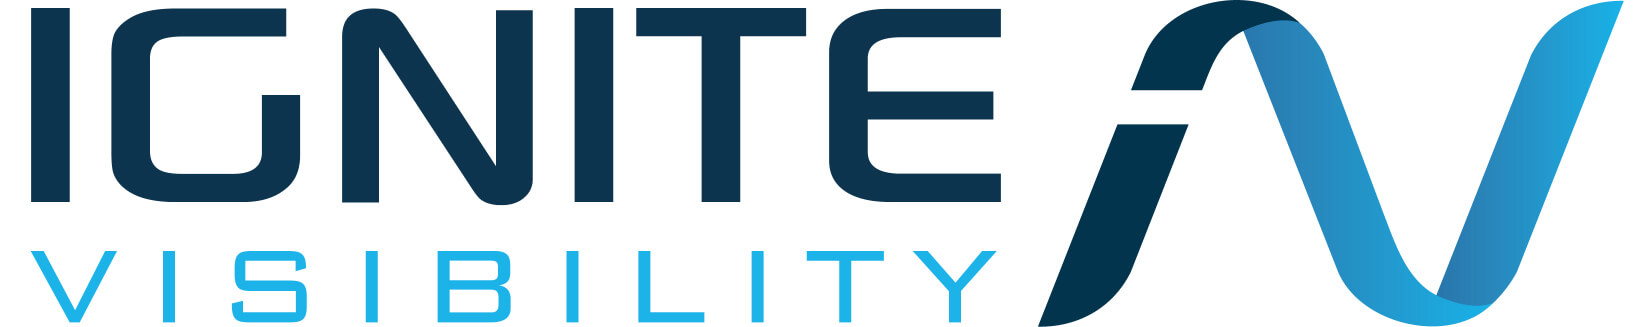 Best Enterprise SEO Agency Logo: Ignite Visibility